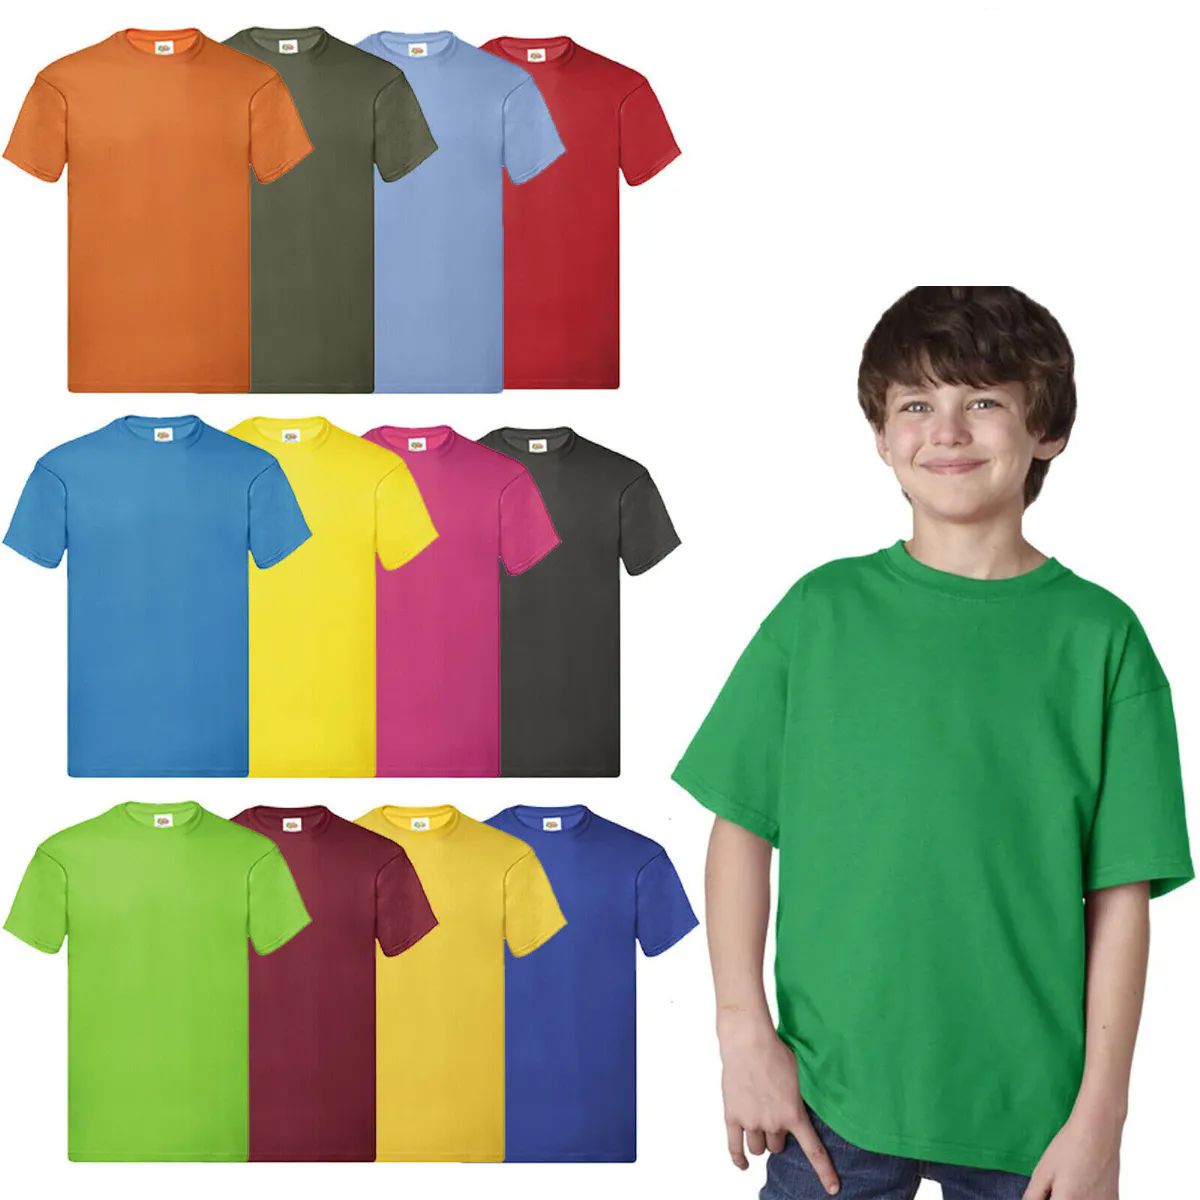 72 Wholesale Billion Hats Kids Youth Cotton Assorted Colors T Shirts Size xl